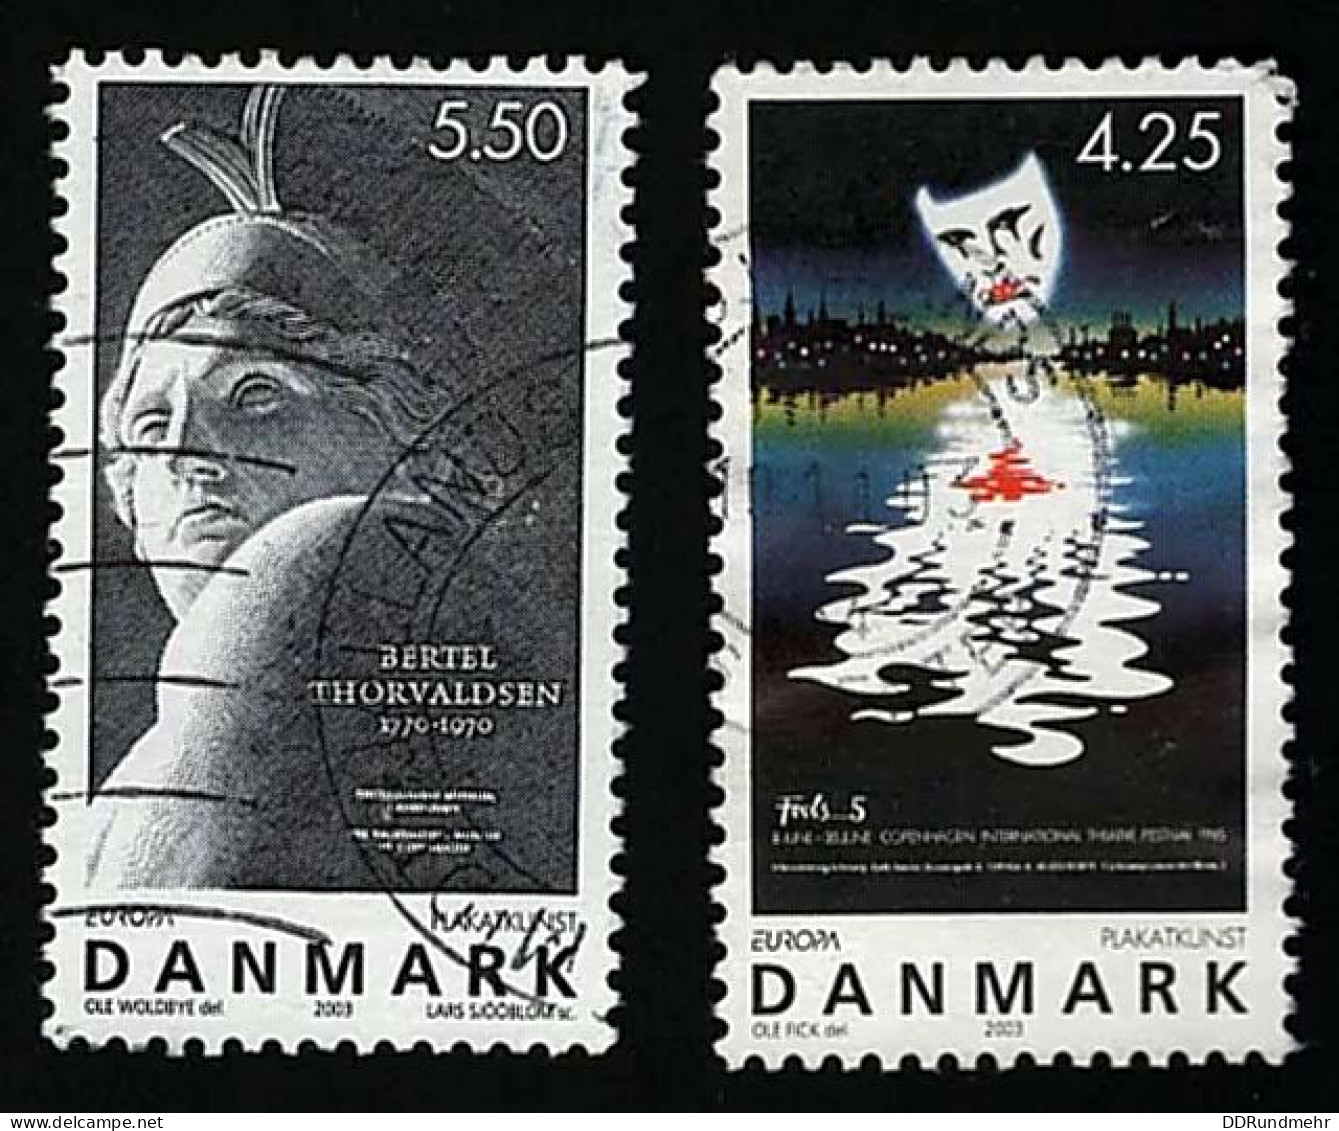 2003 Europa Michel DK 1341- 1342 Stamp Number DK 1250 - 1251 Yvert Et Tellier DK 1344 - 1345 Used - Gebraucht